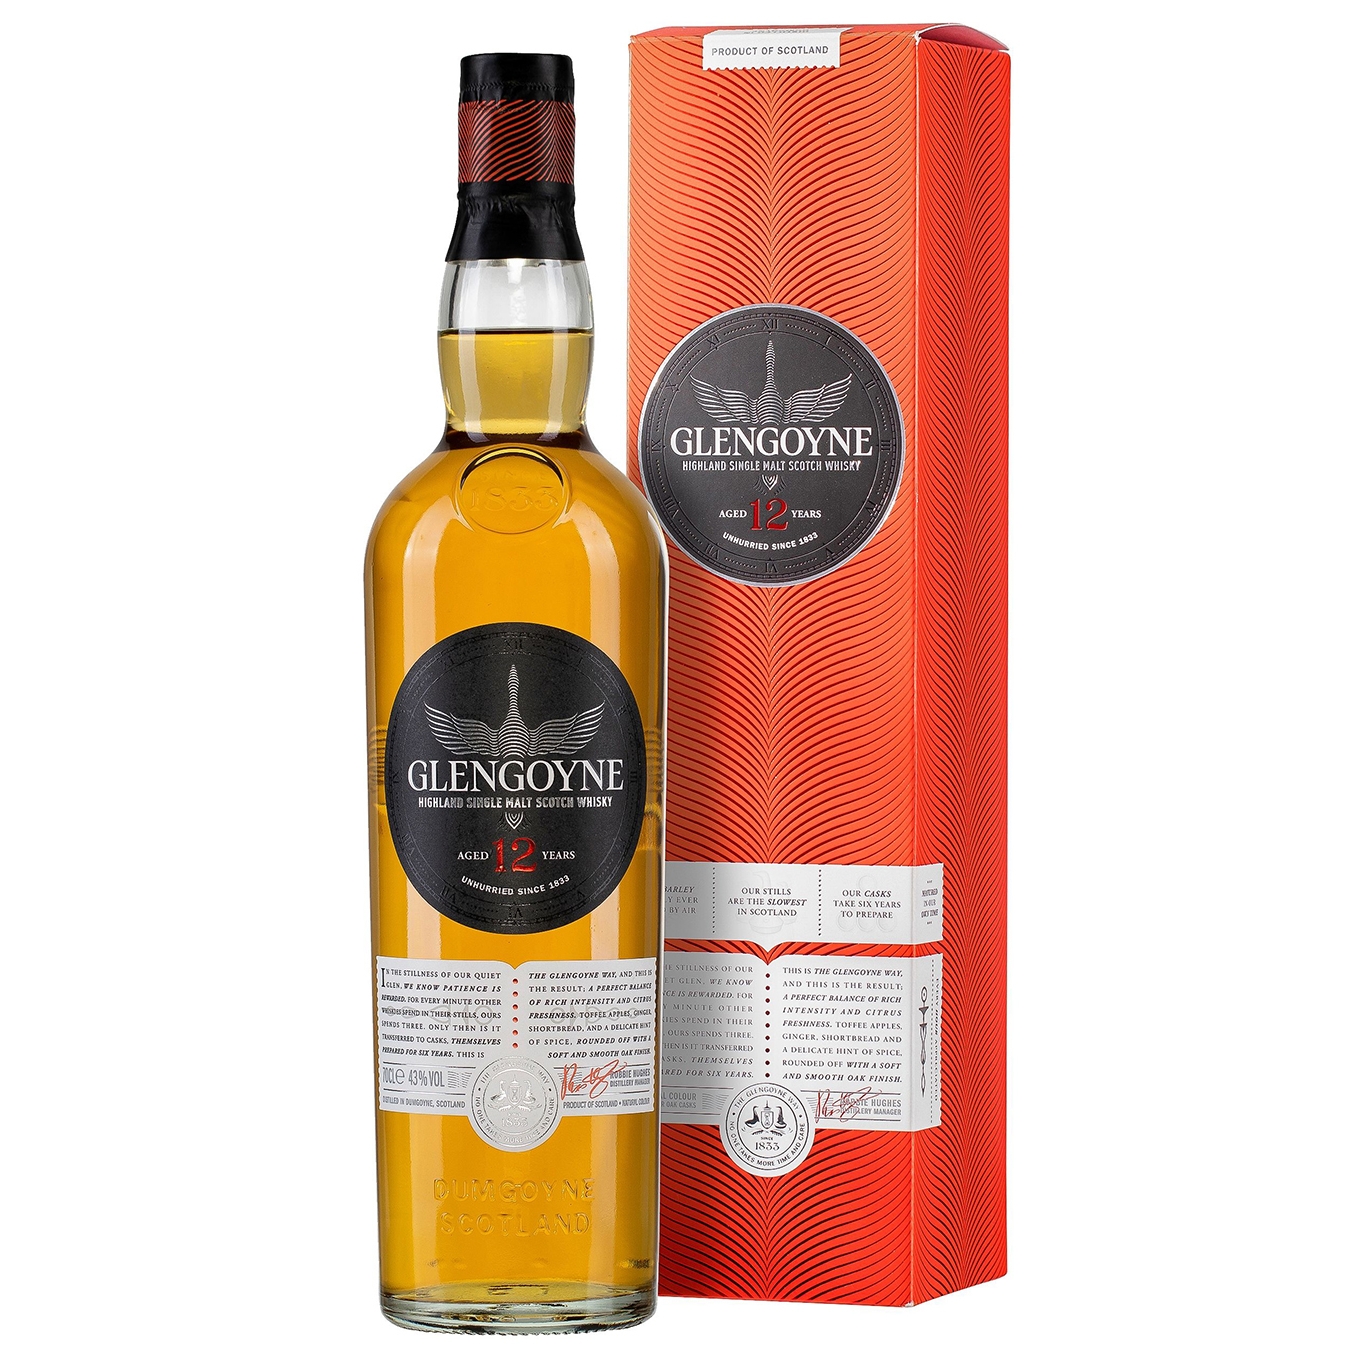 Glengoyne 12 Year Old Single Malt Scotch Whisky